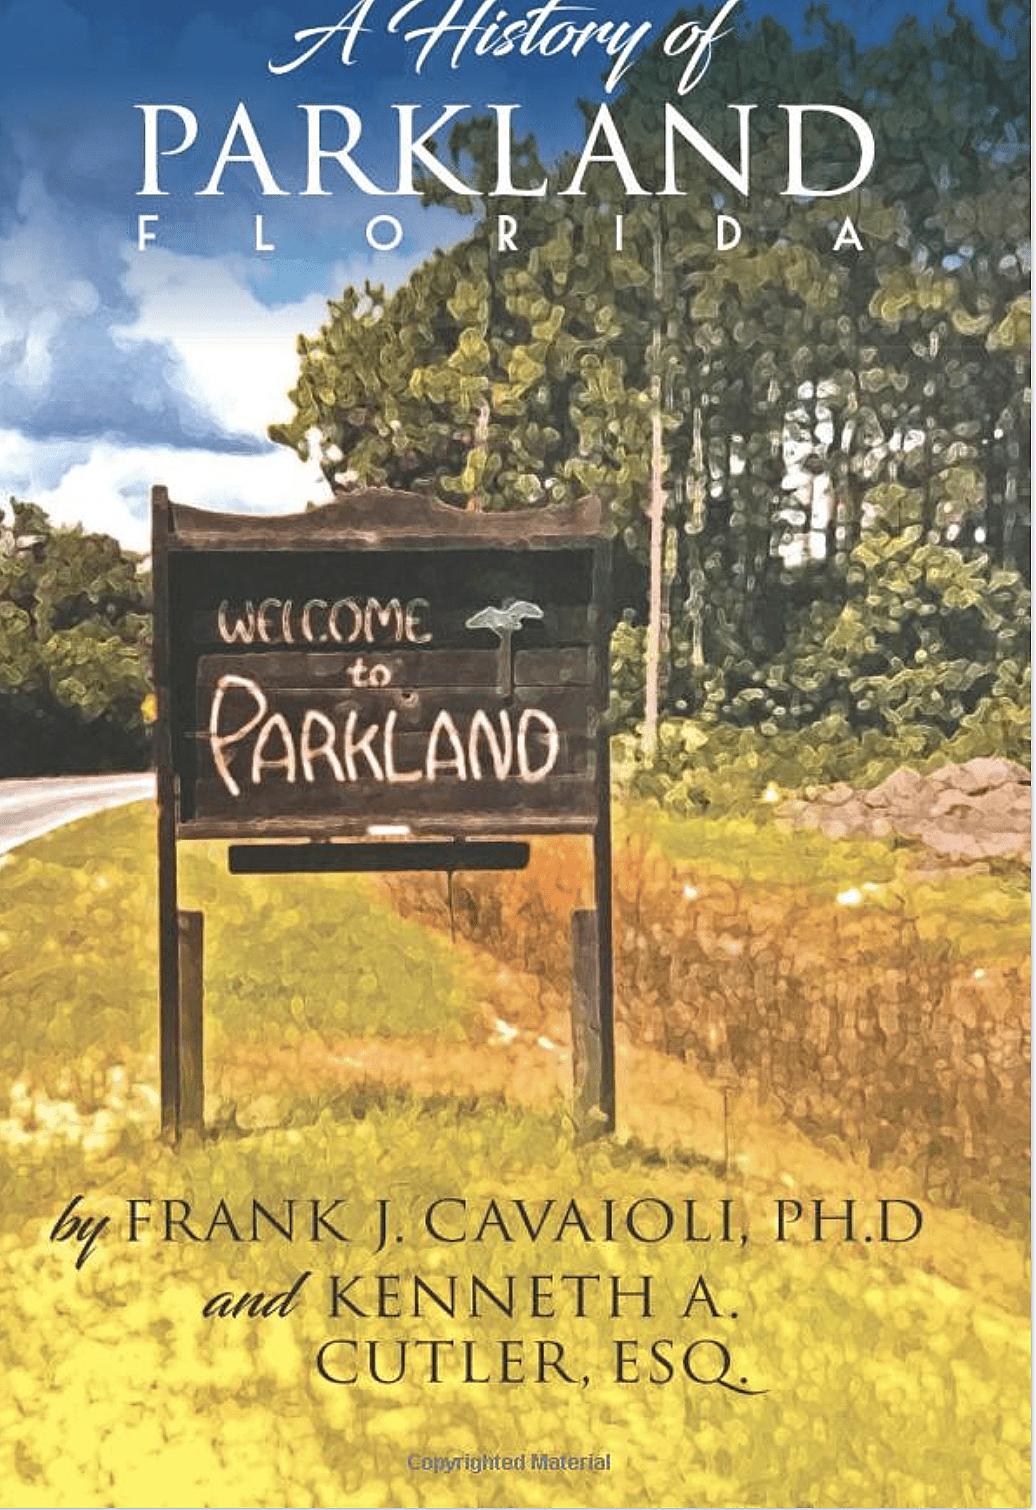 A story from Parkland, Florida